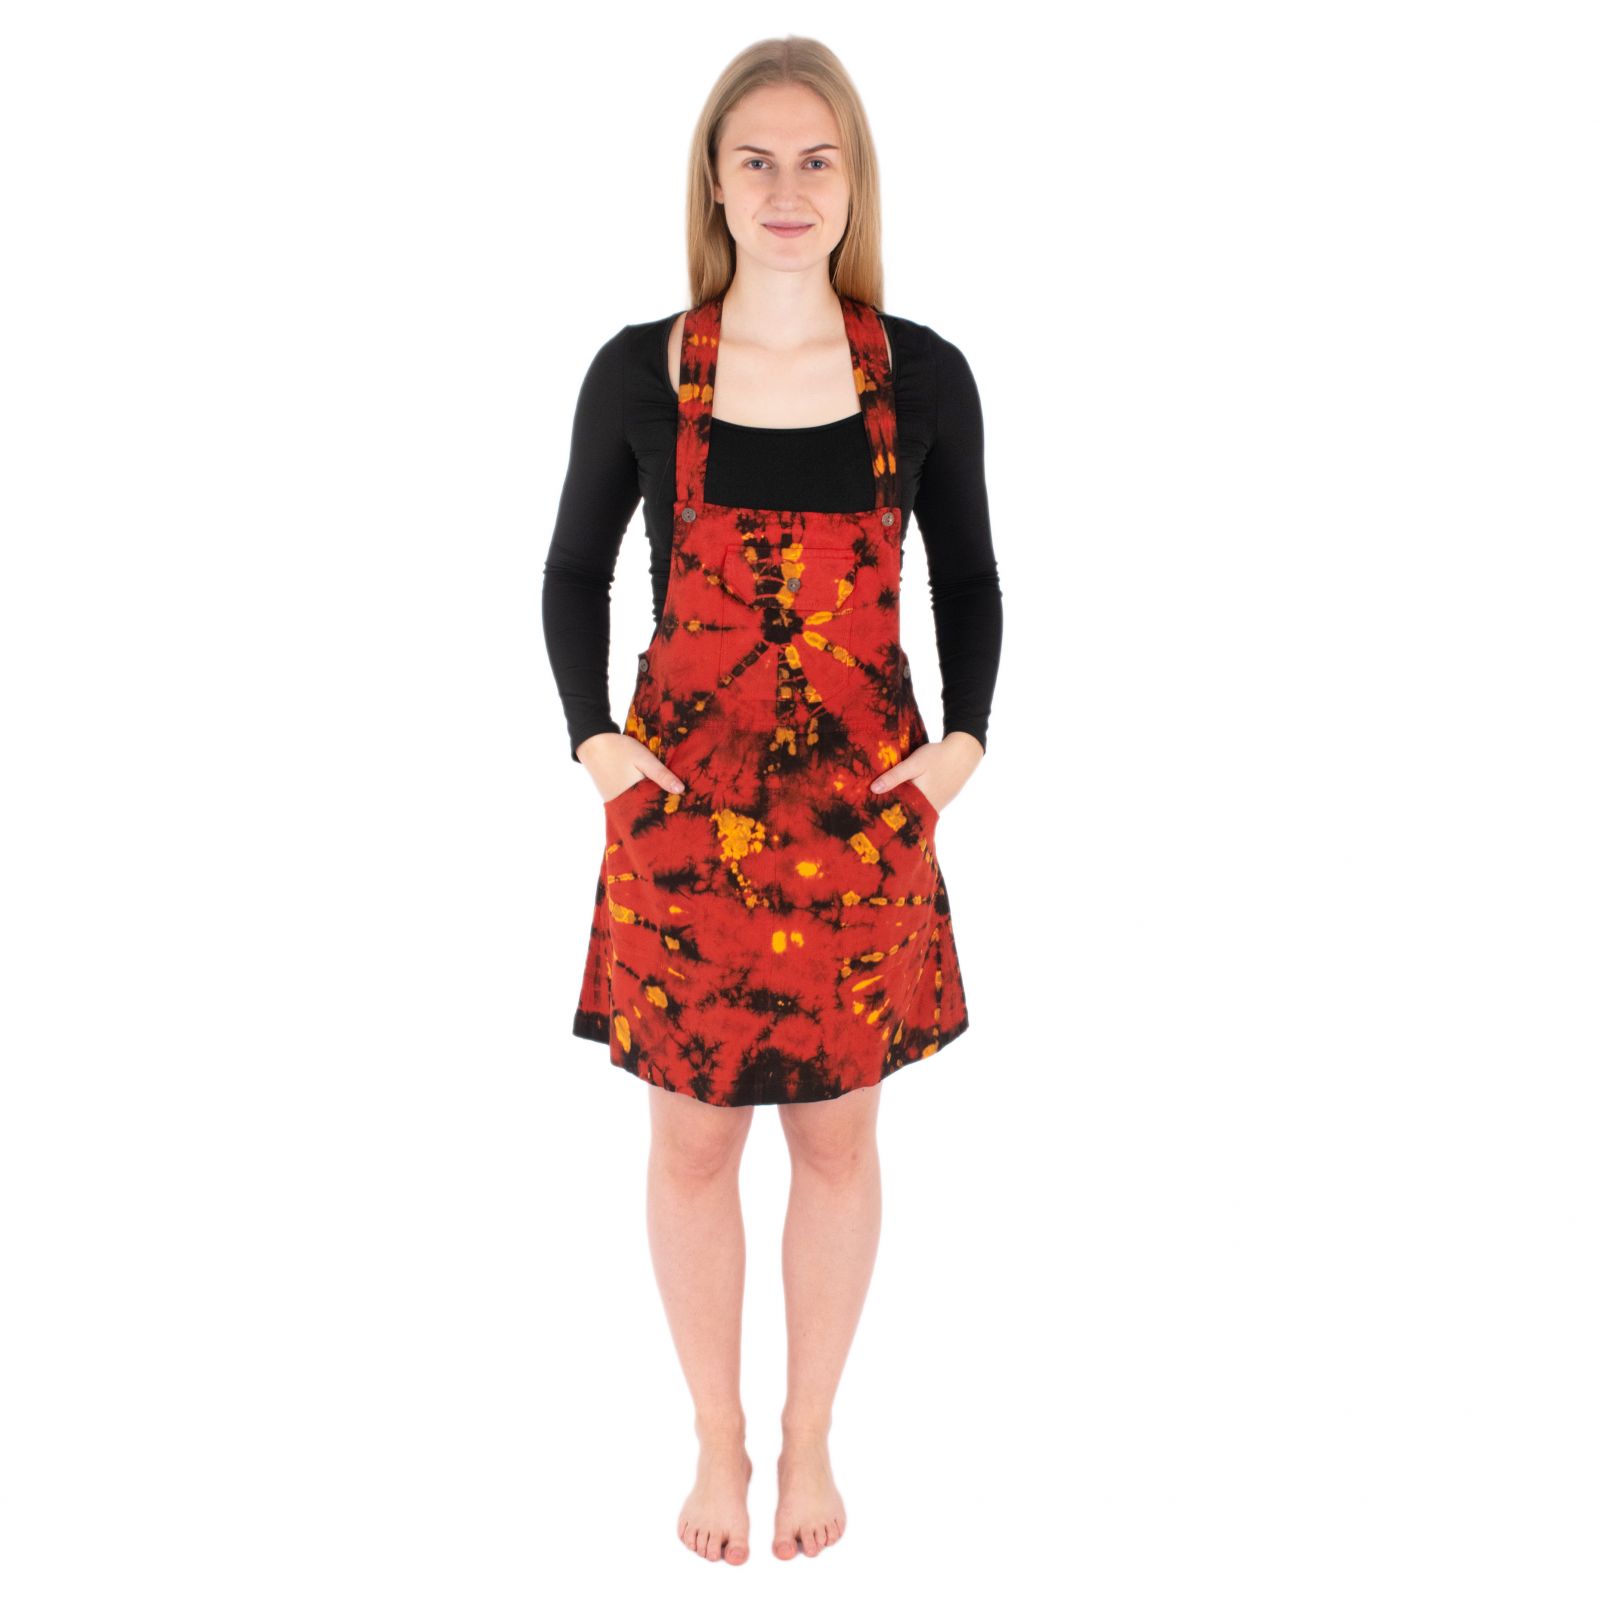 Dungaree / apron tie-dye dress Janis Red Nepal